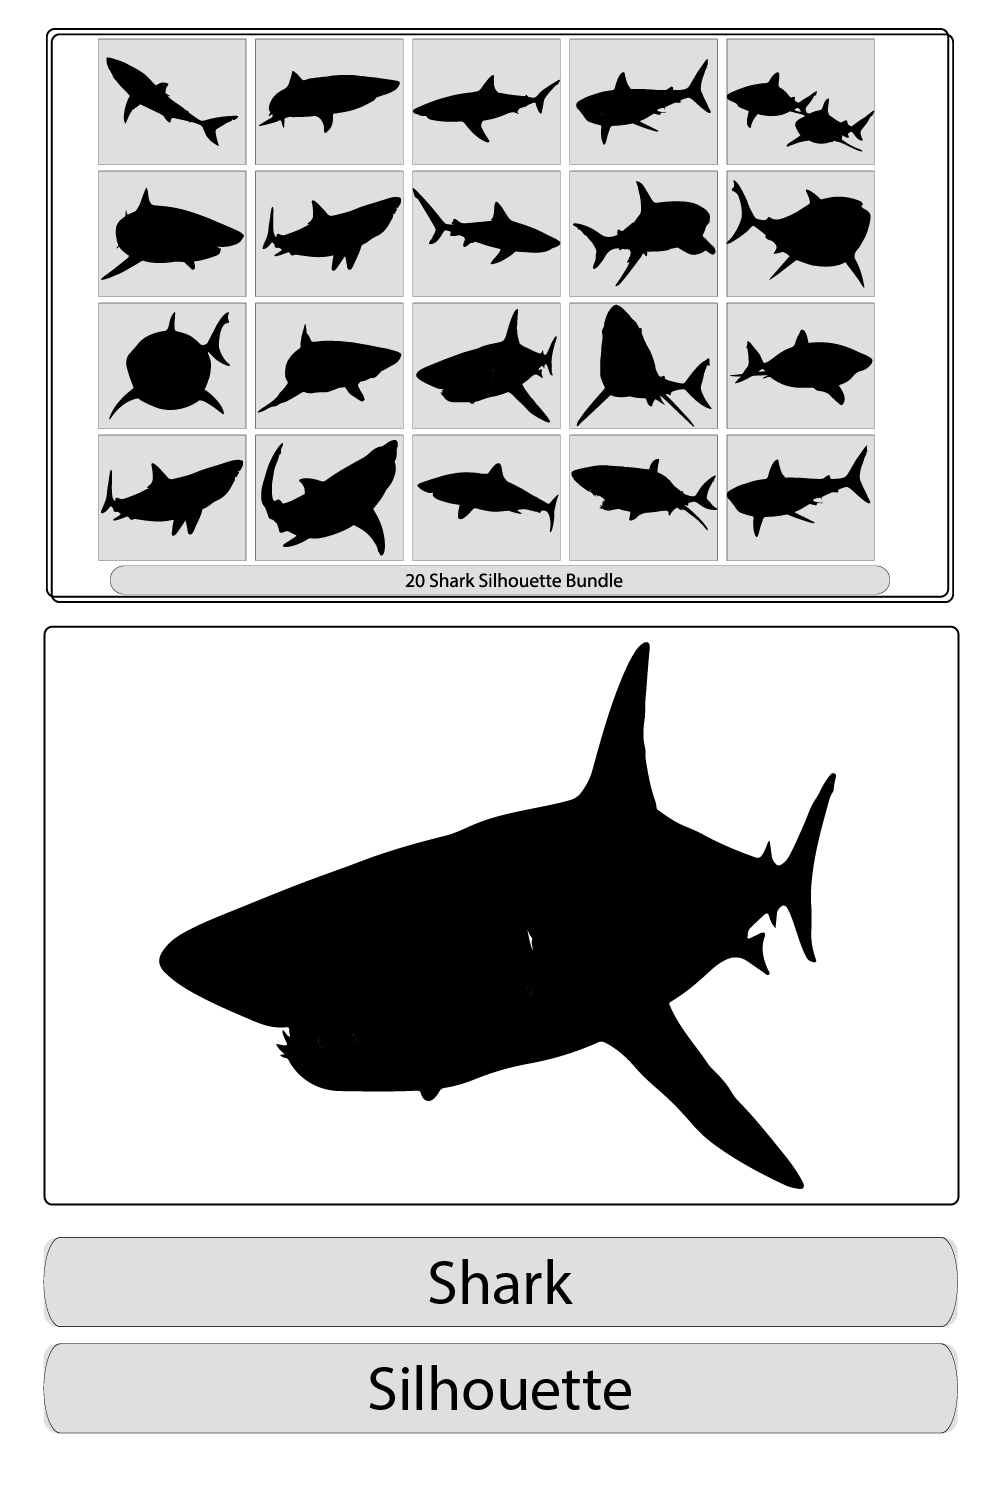 silhouette set of shark,Shark icon,Vector illustration of a black silhouette shark pinterest preview image.